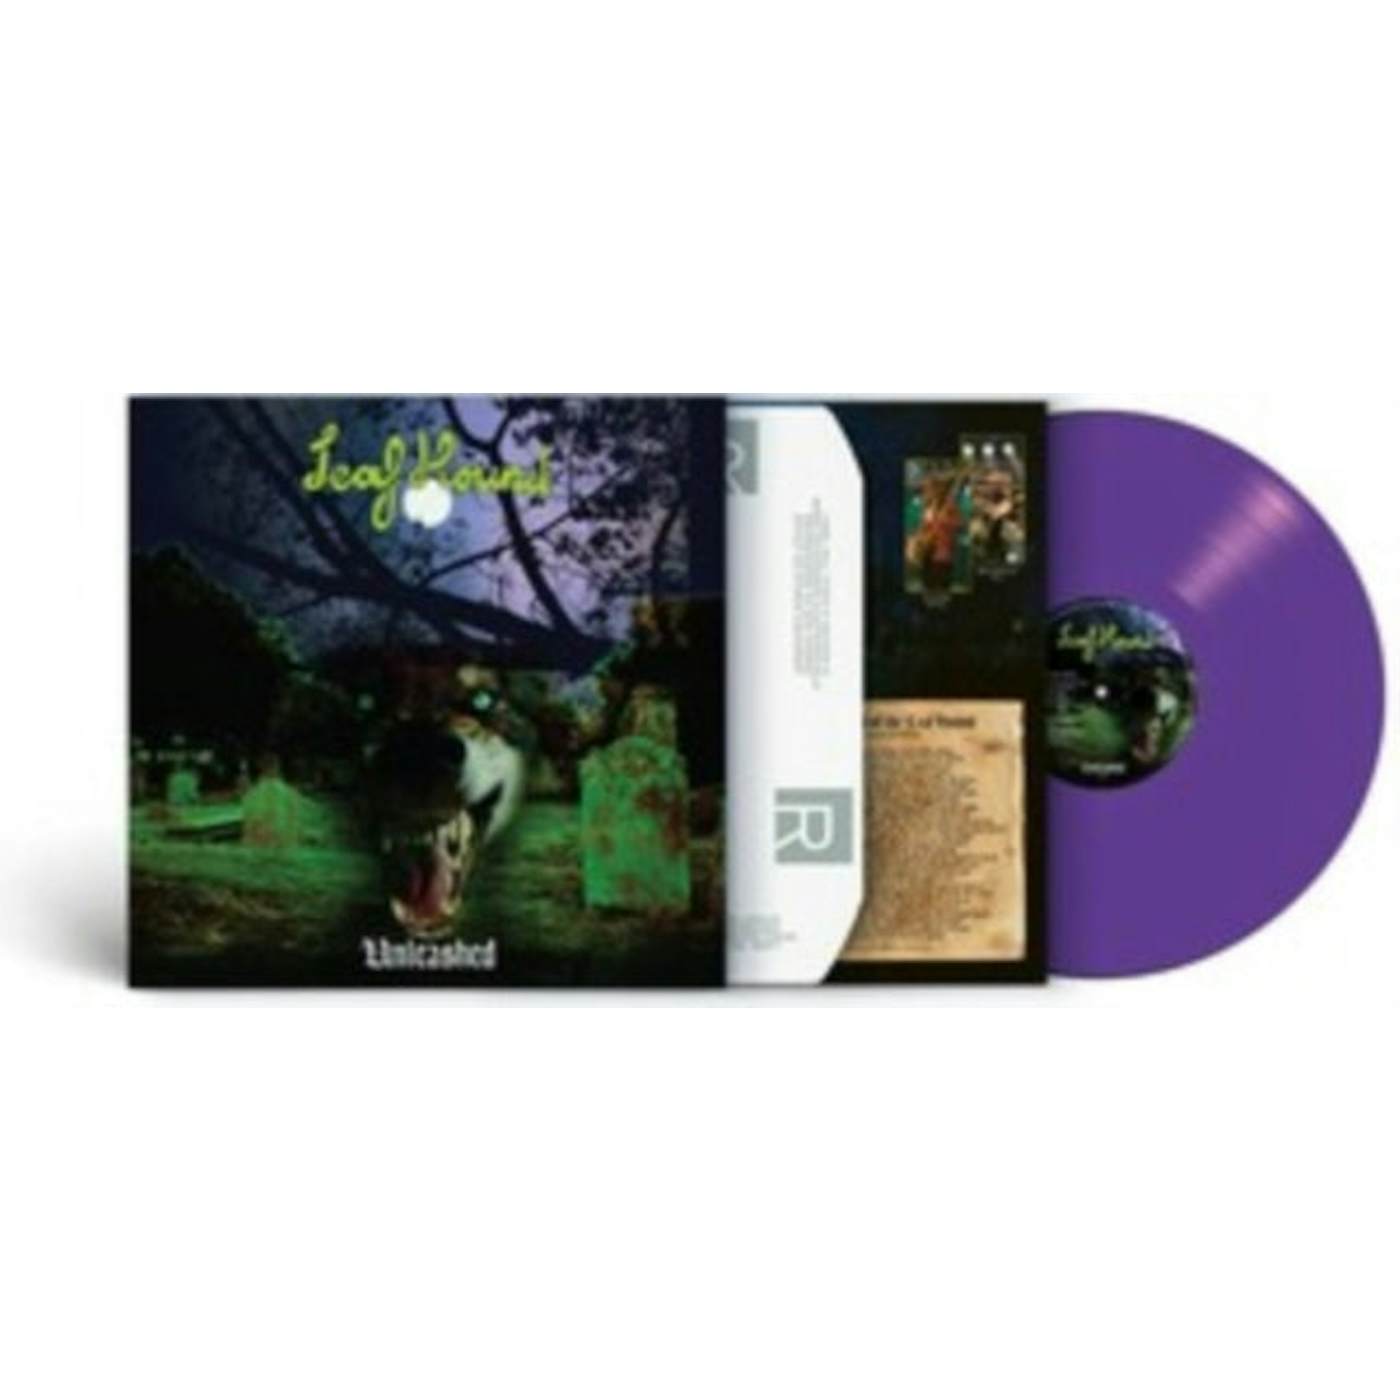 Leaf Hound LP Vinyl Record - Unleashed (Purple Vinyl)